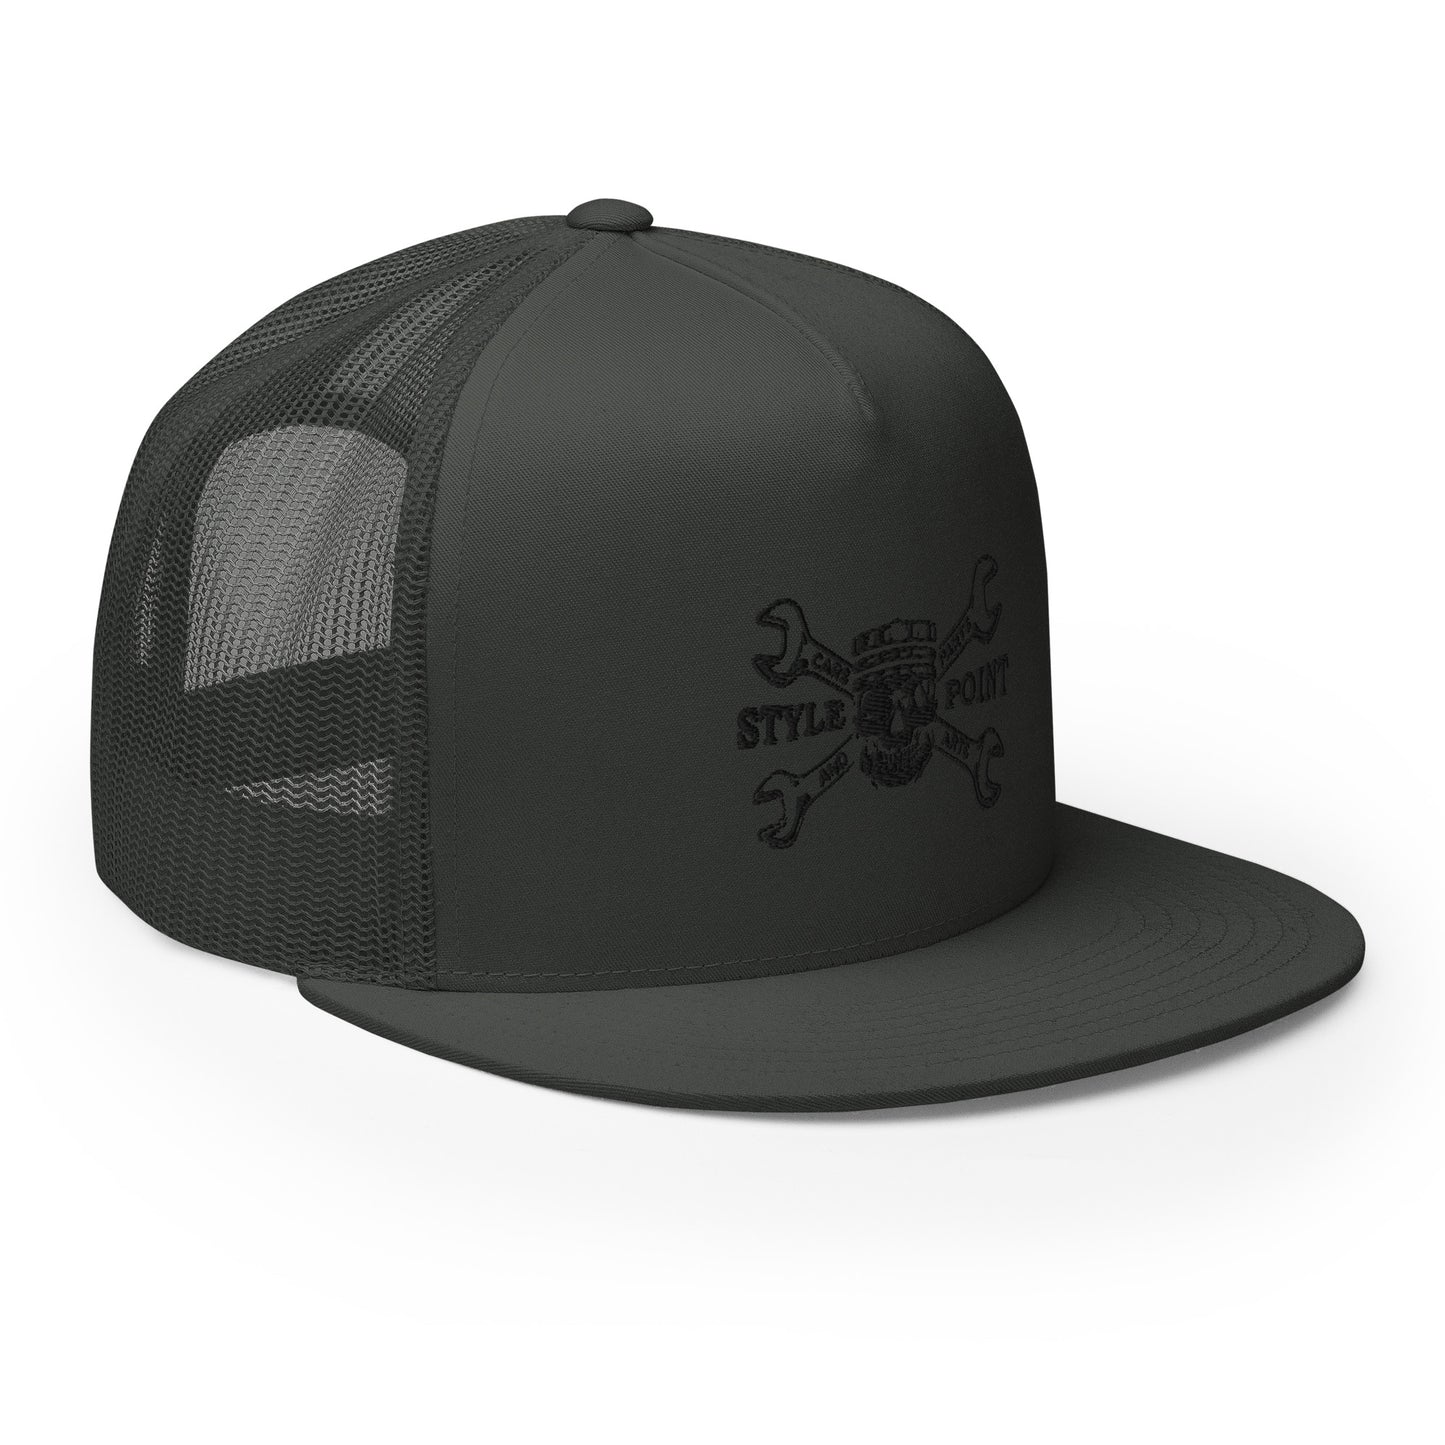 Stylepoint Trucker Cap Logo black